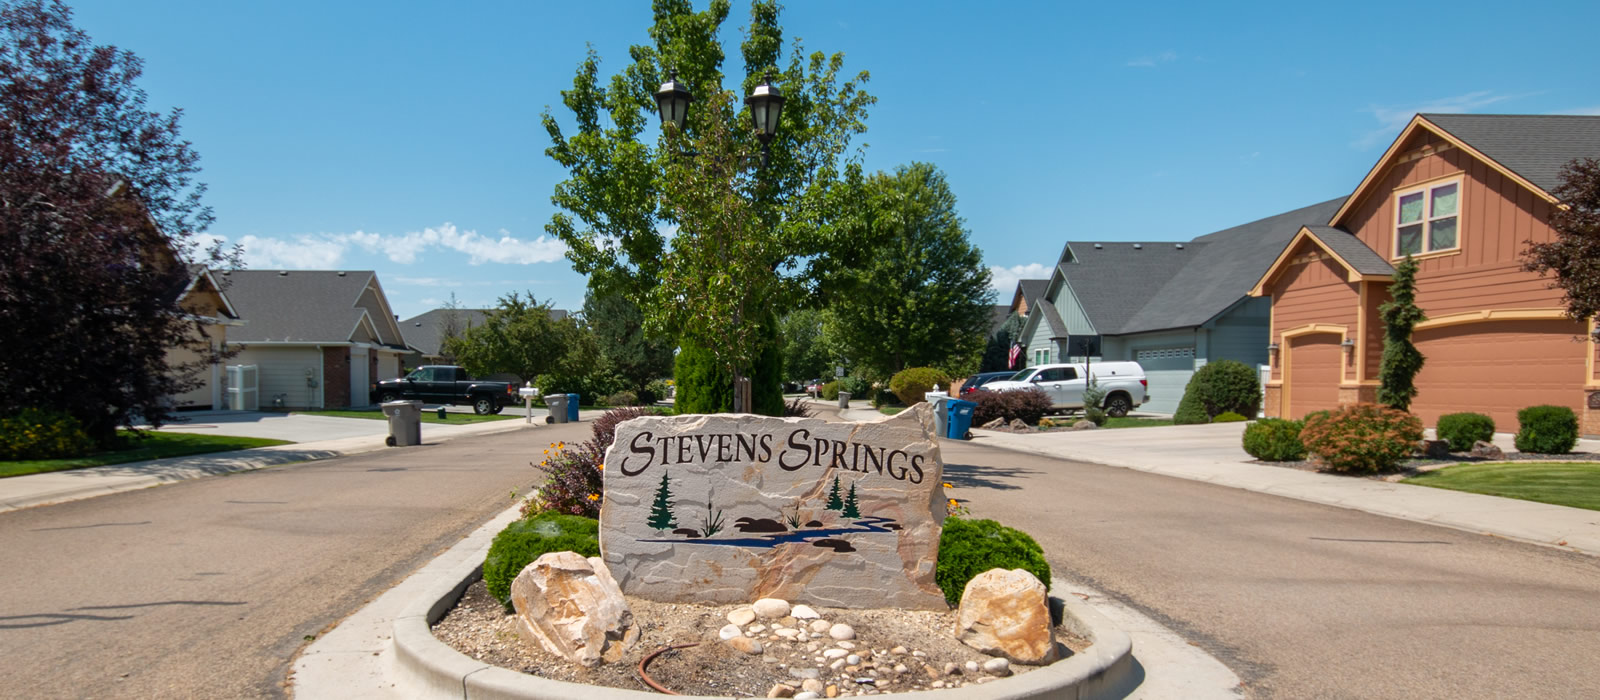 Steven Springs Subdivision